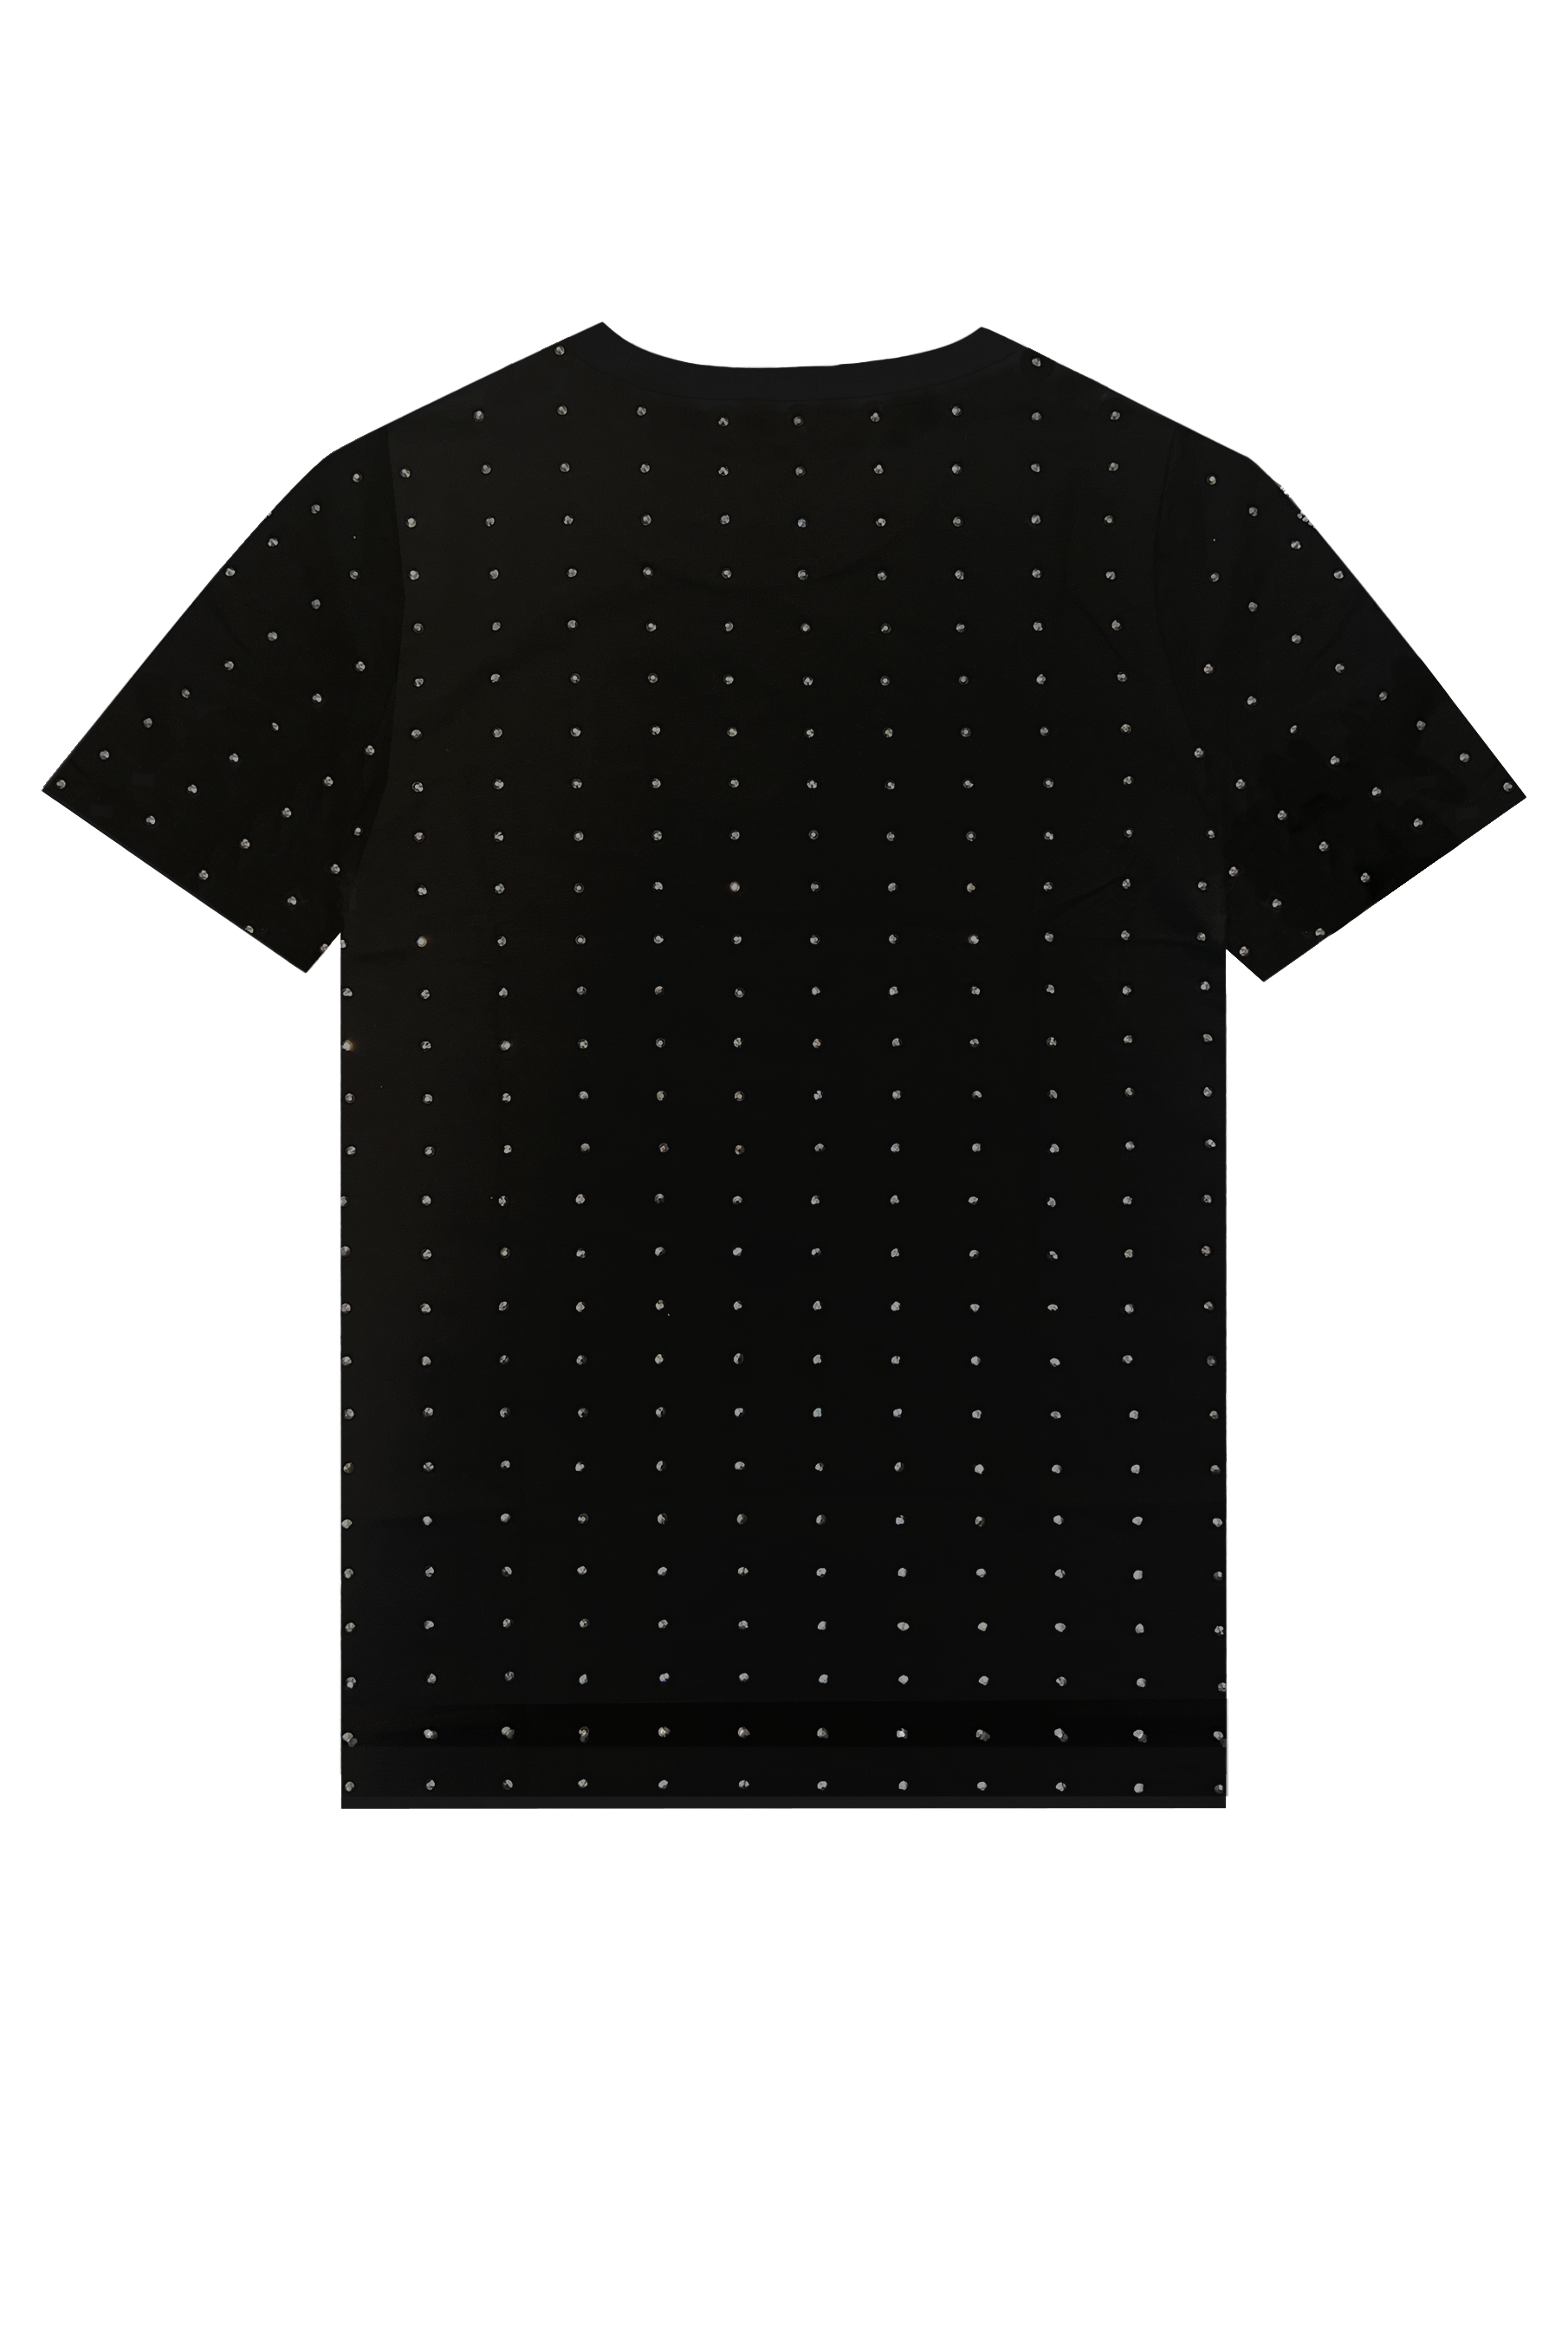 Shine Capsule Black T-Shirt